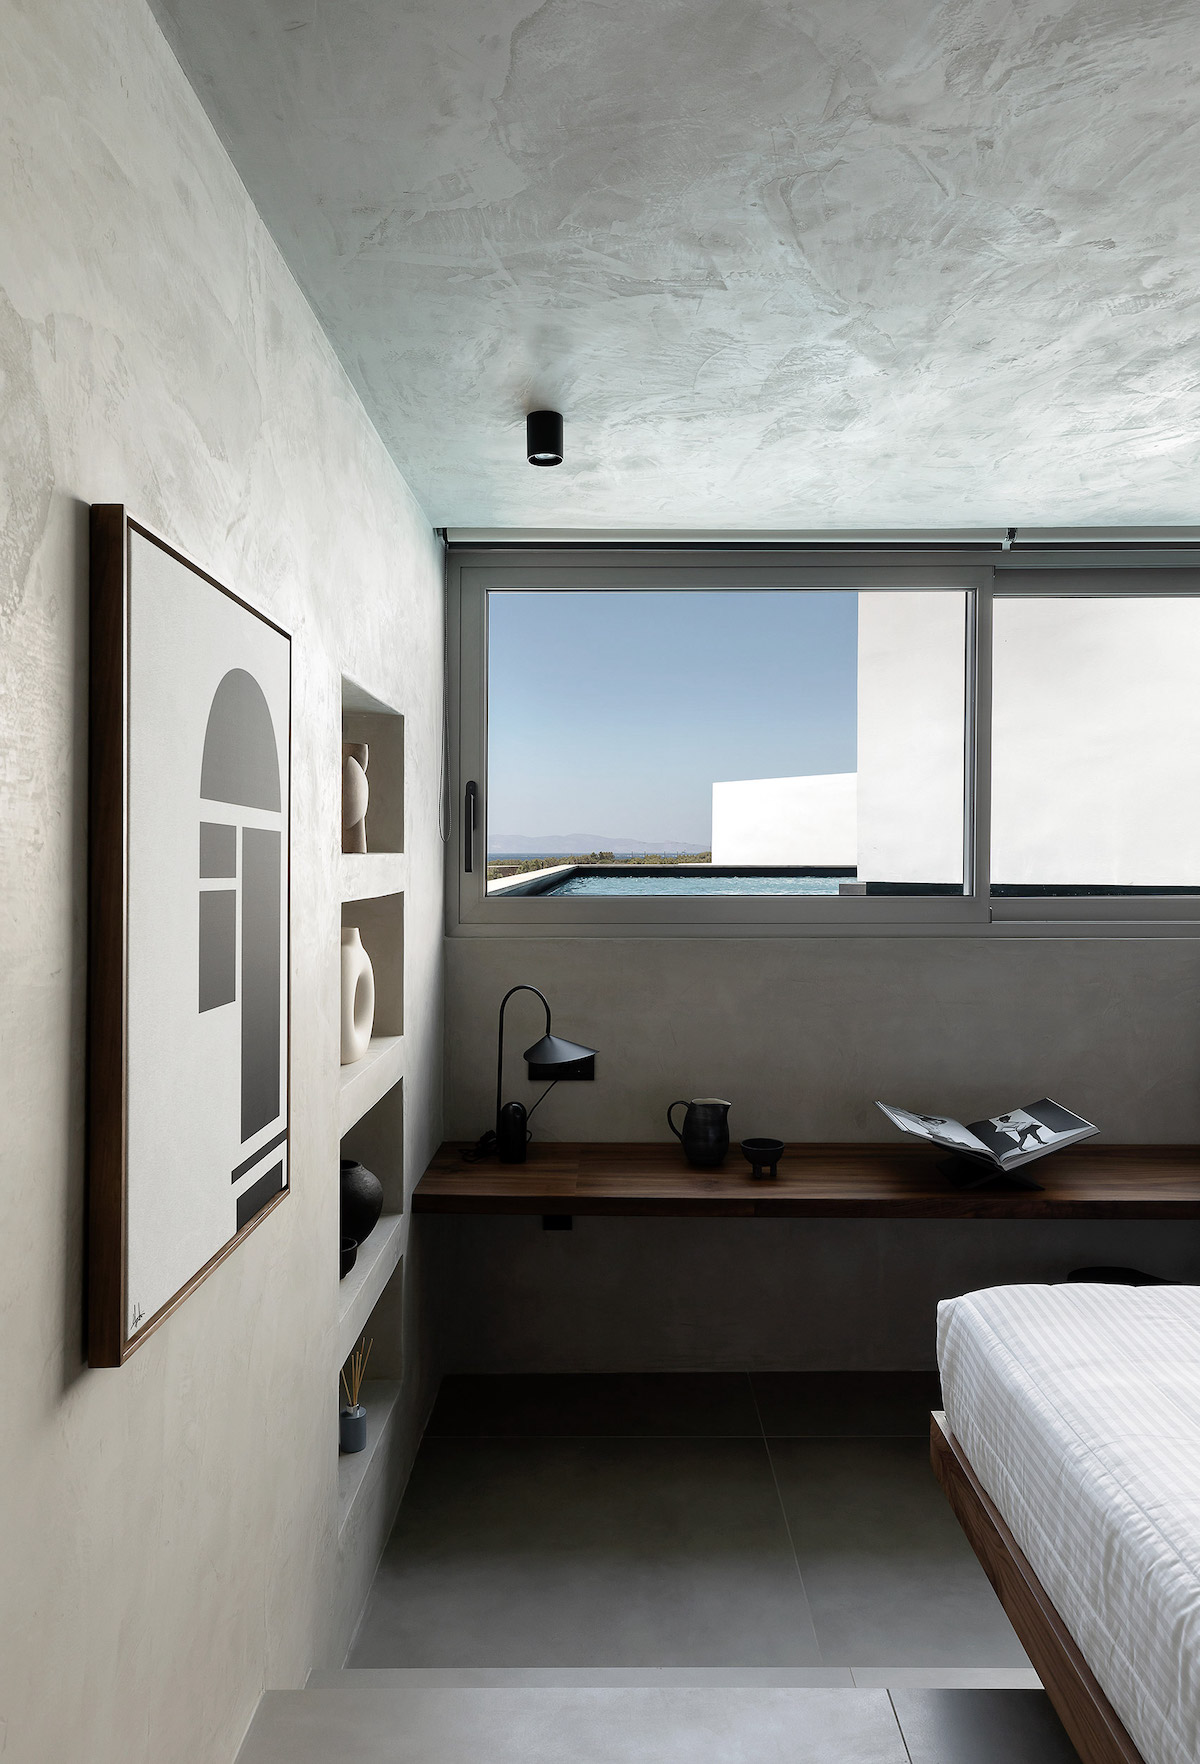 Bauhaus design scheme inside industrial guestroom